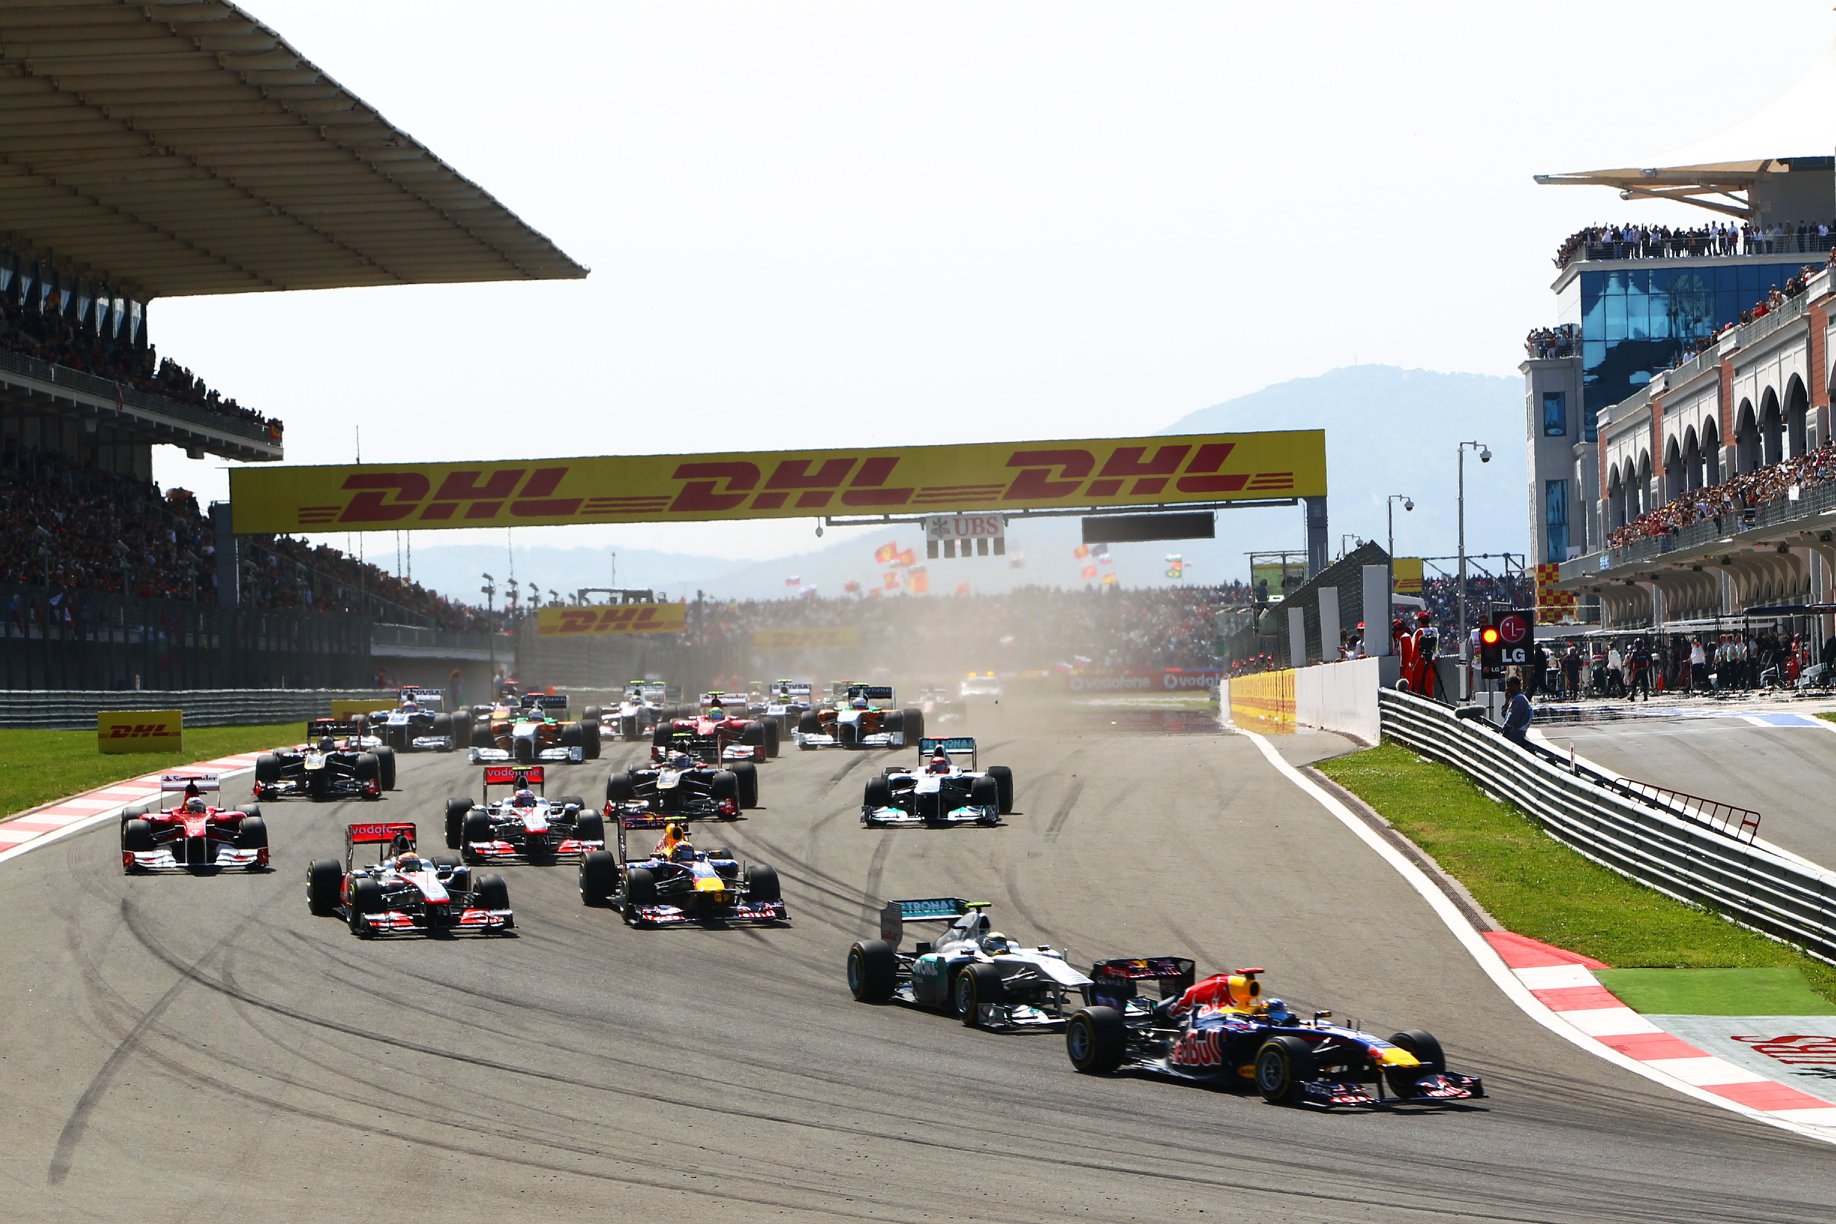 2010 Turkish Grand Prix.jpg